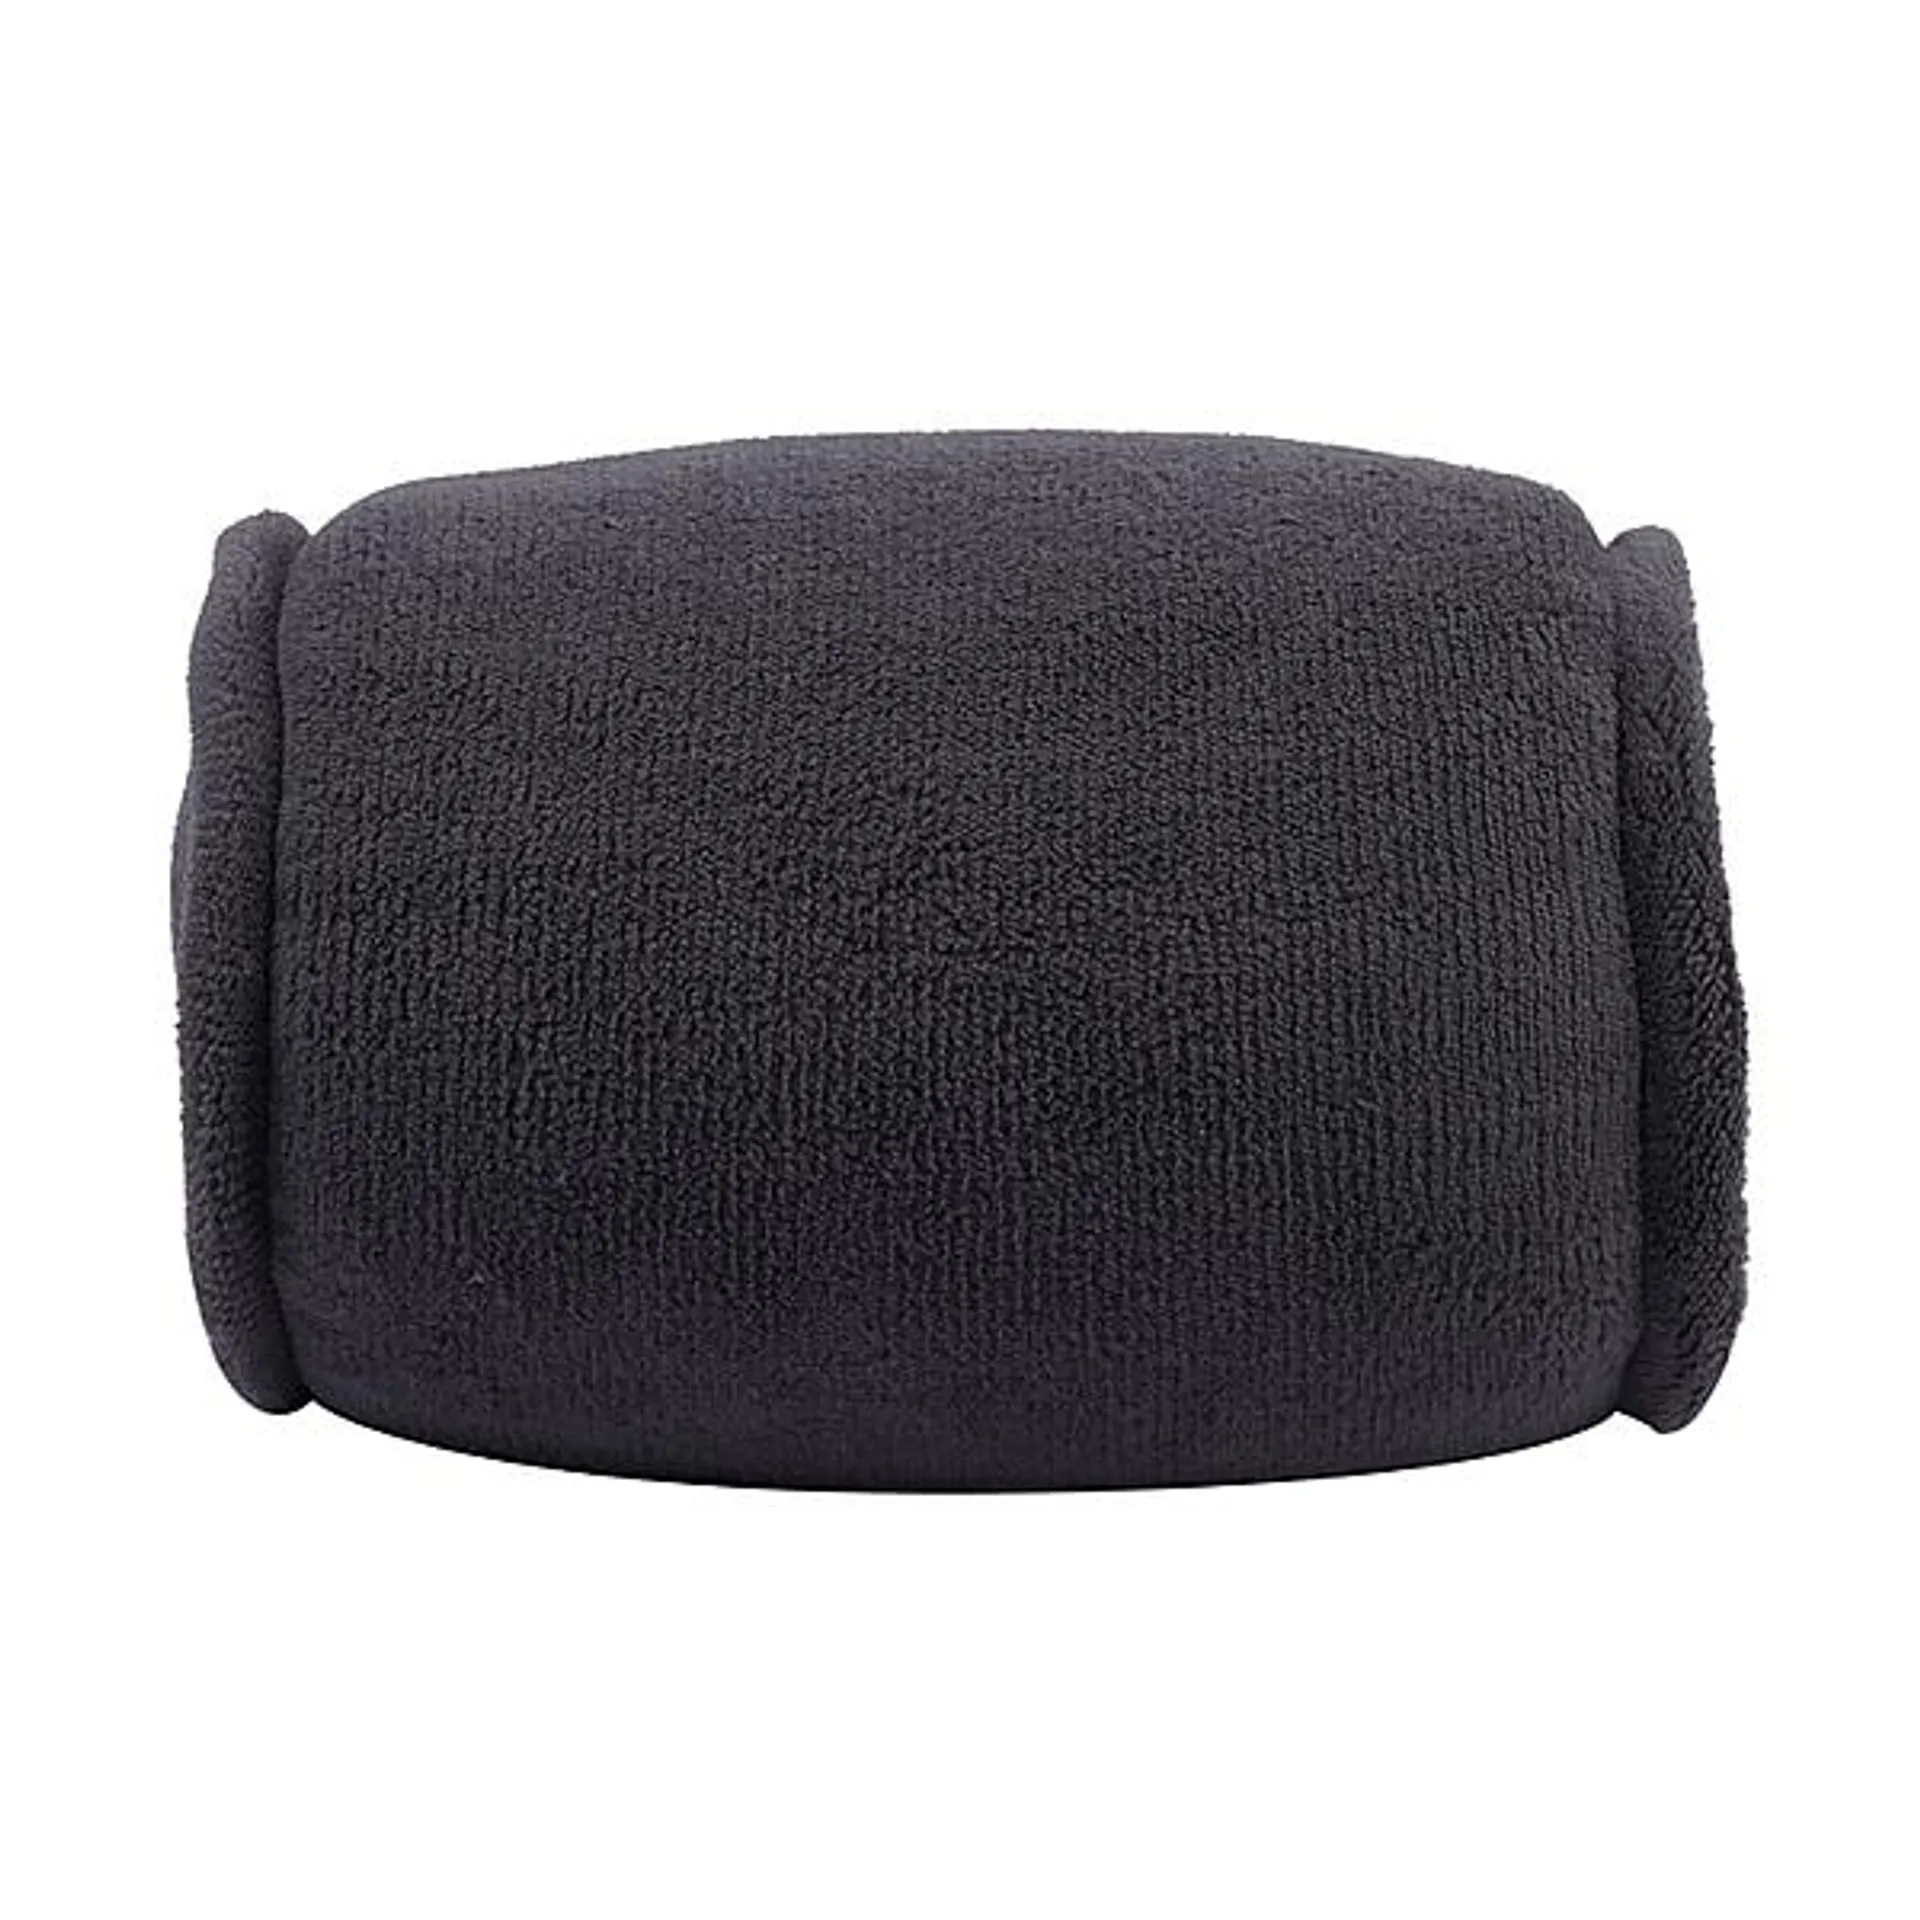 Portable Vibrating Massage Pillow (Size 25x15 Cm) - Grey